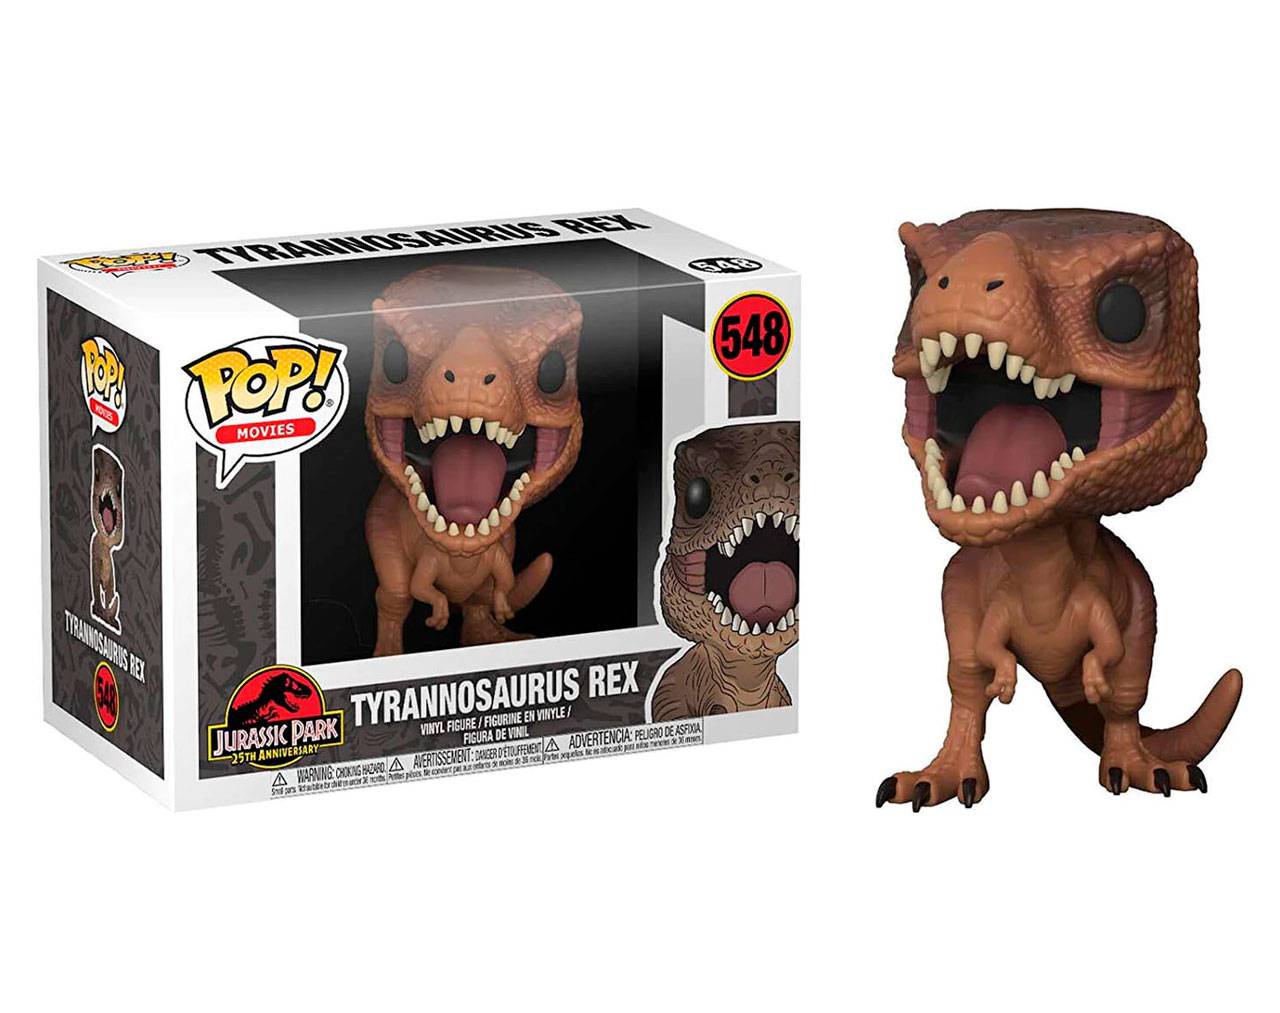 Tyrannosaurus Rex - Jurassic Park Pop! Vinyl